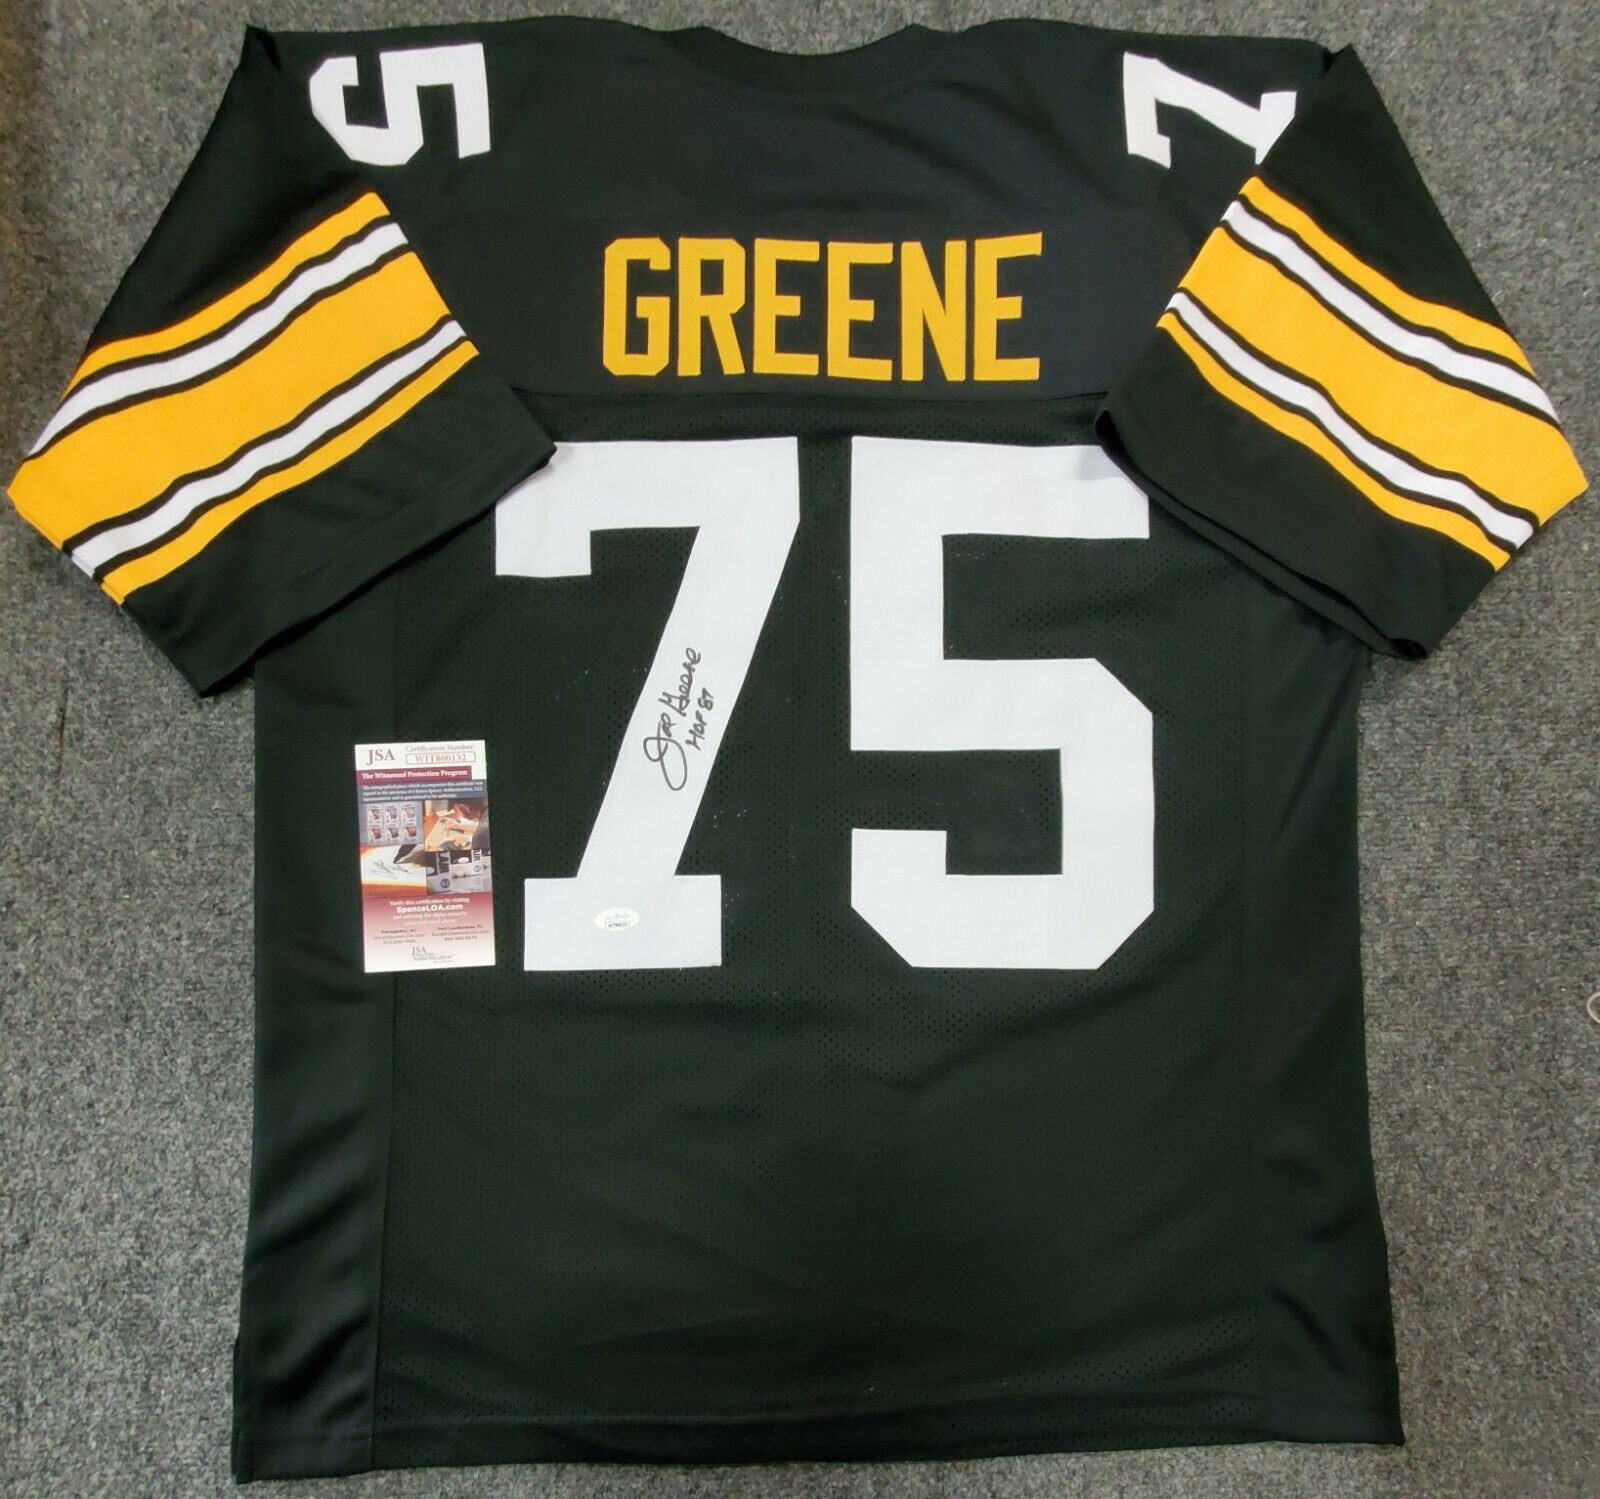 MVP Authentics Pittsburgh Steelers Mean Joe Greene Autographed Inscribed Jersey Jsa Coa 265.50 sports jersey framing , jersey framing